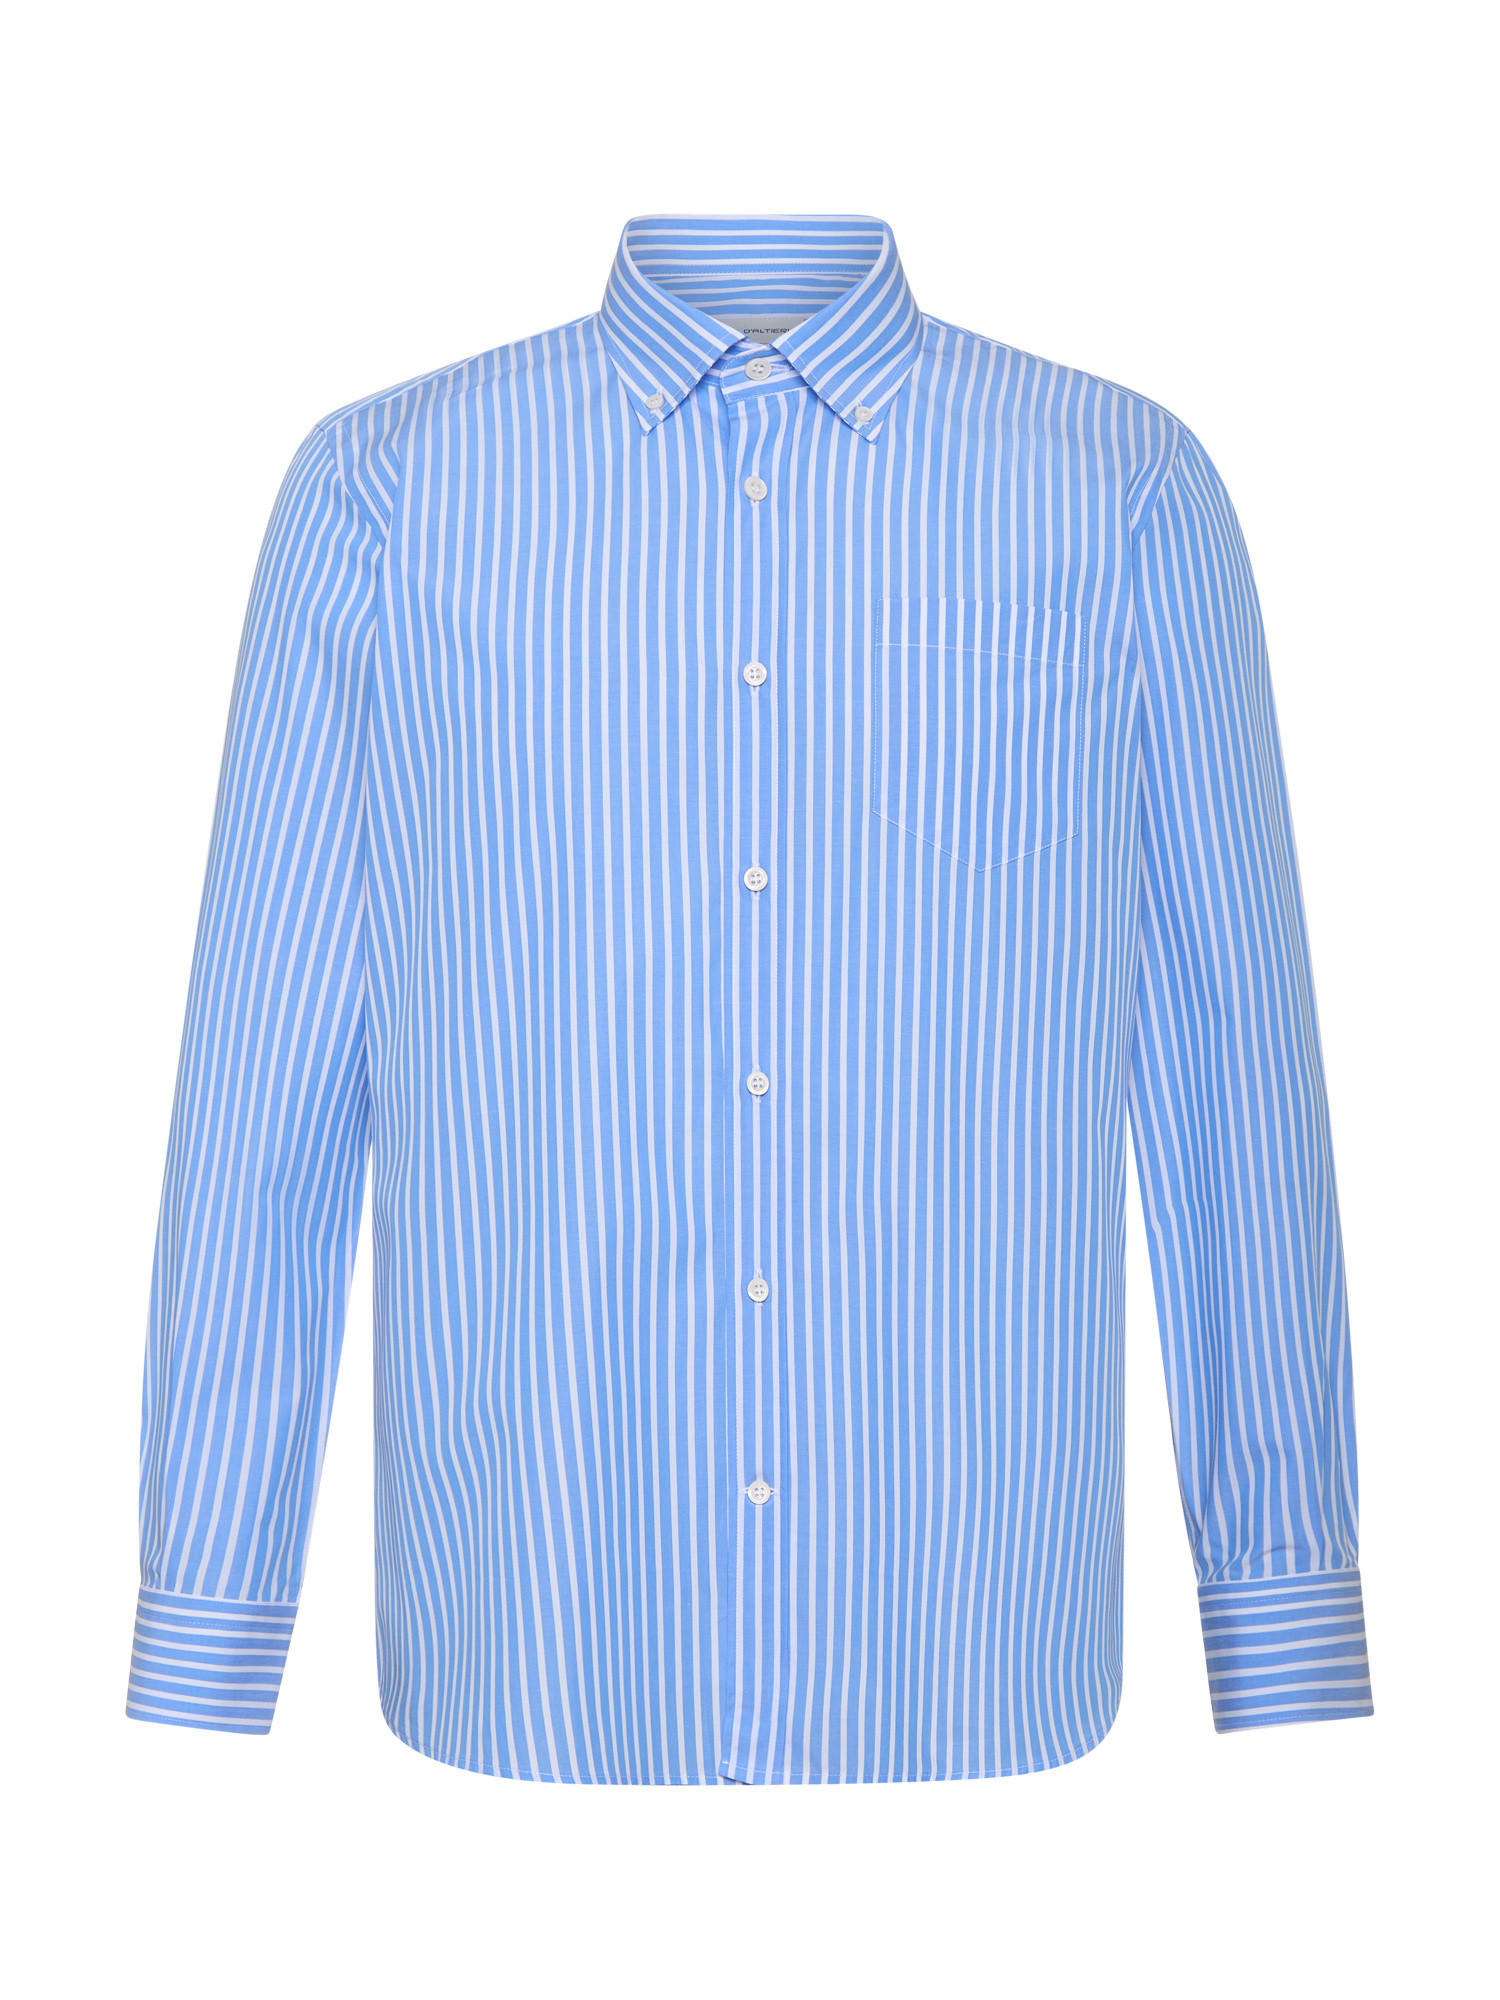 Luca D'Altieri - Regular fit casual shirt in pure cotton poplin, Light Blue, large image number 1